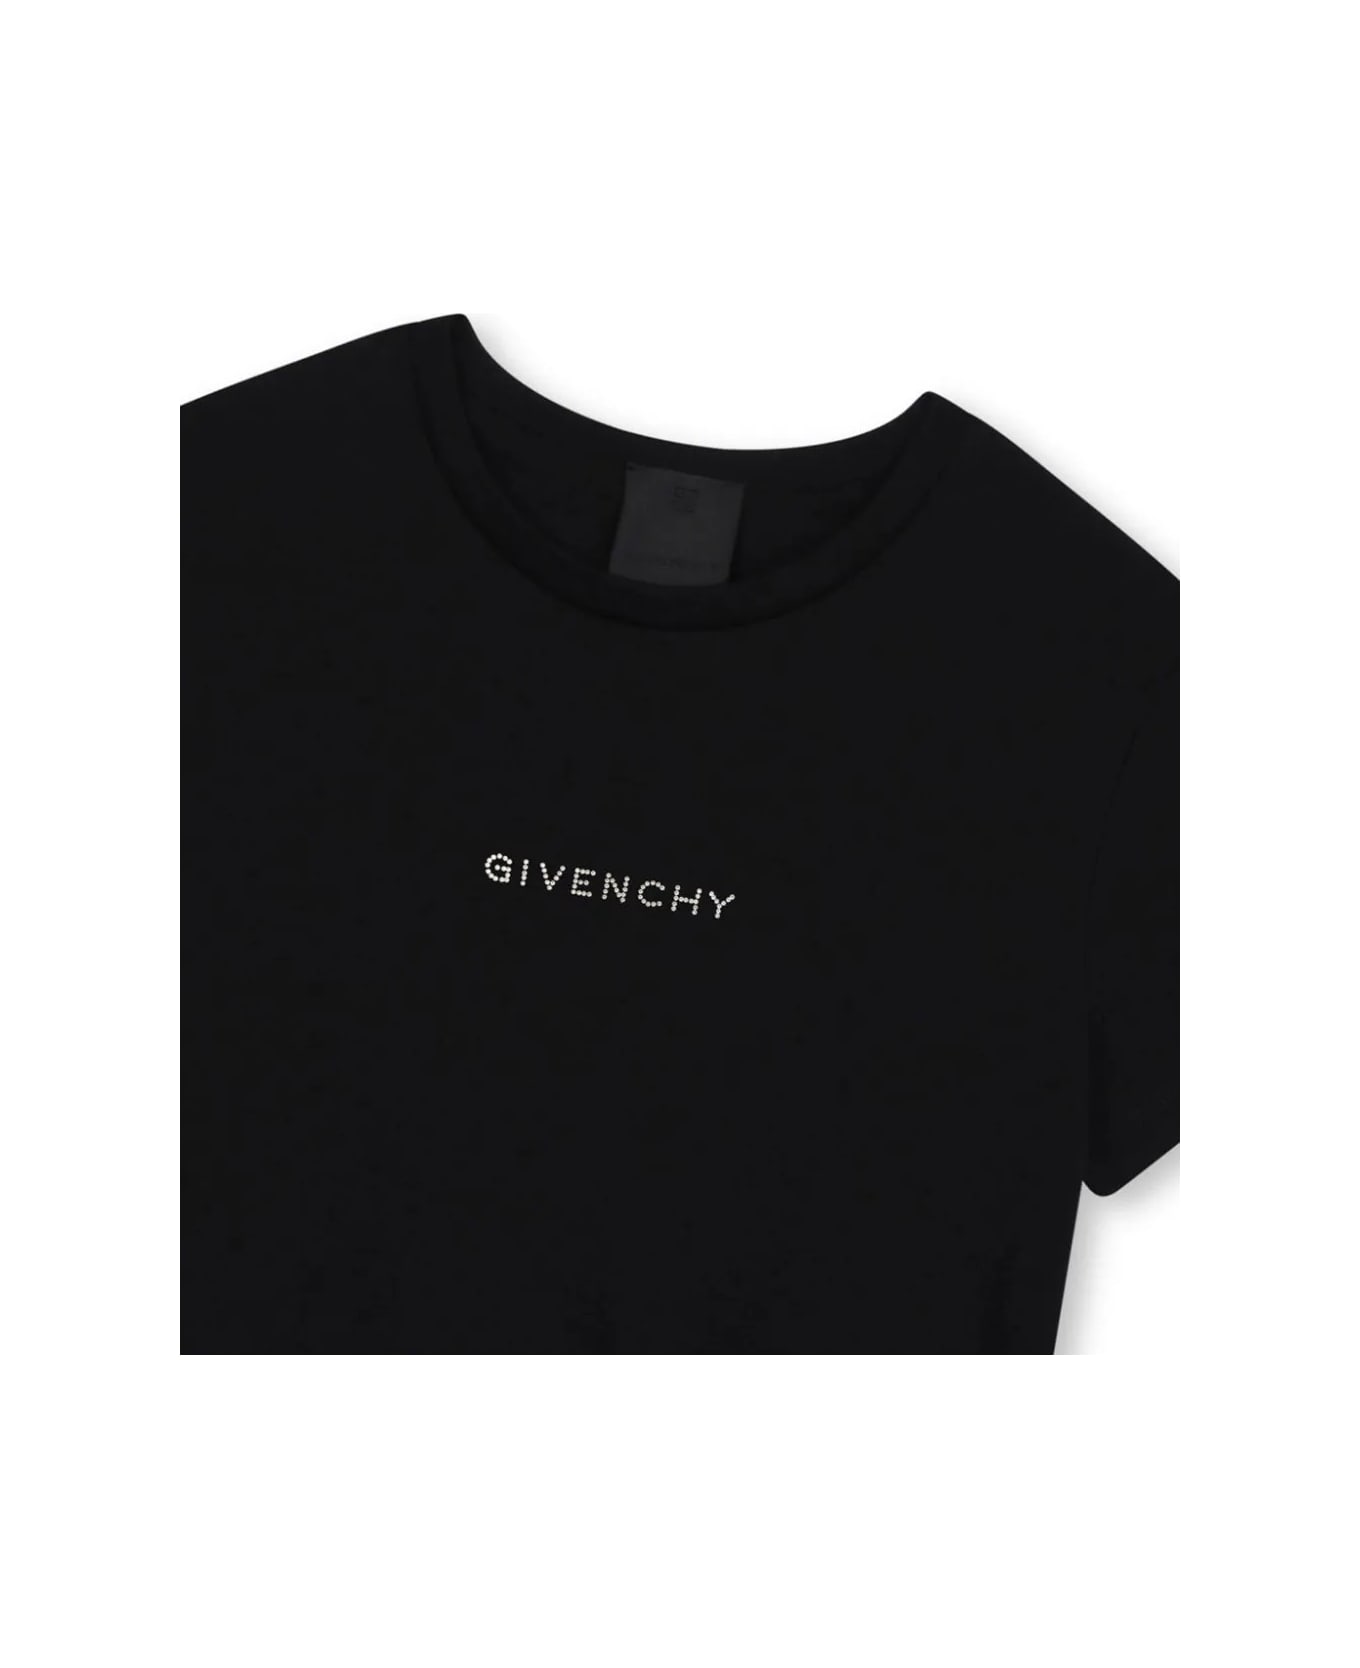 Givenchy Black Peplum T-shirt With Rhinestone Logo - Black